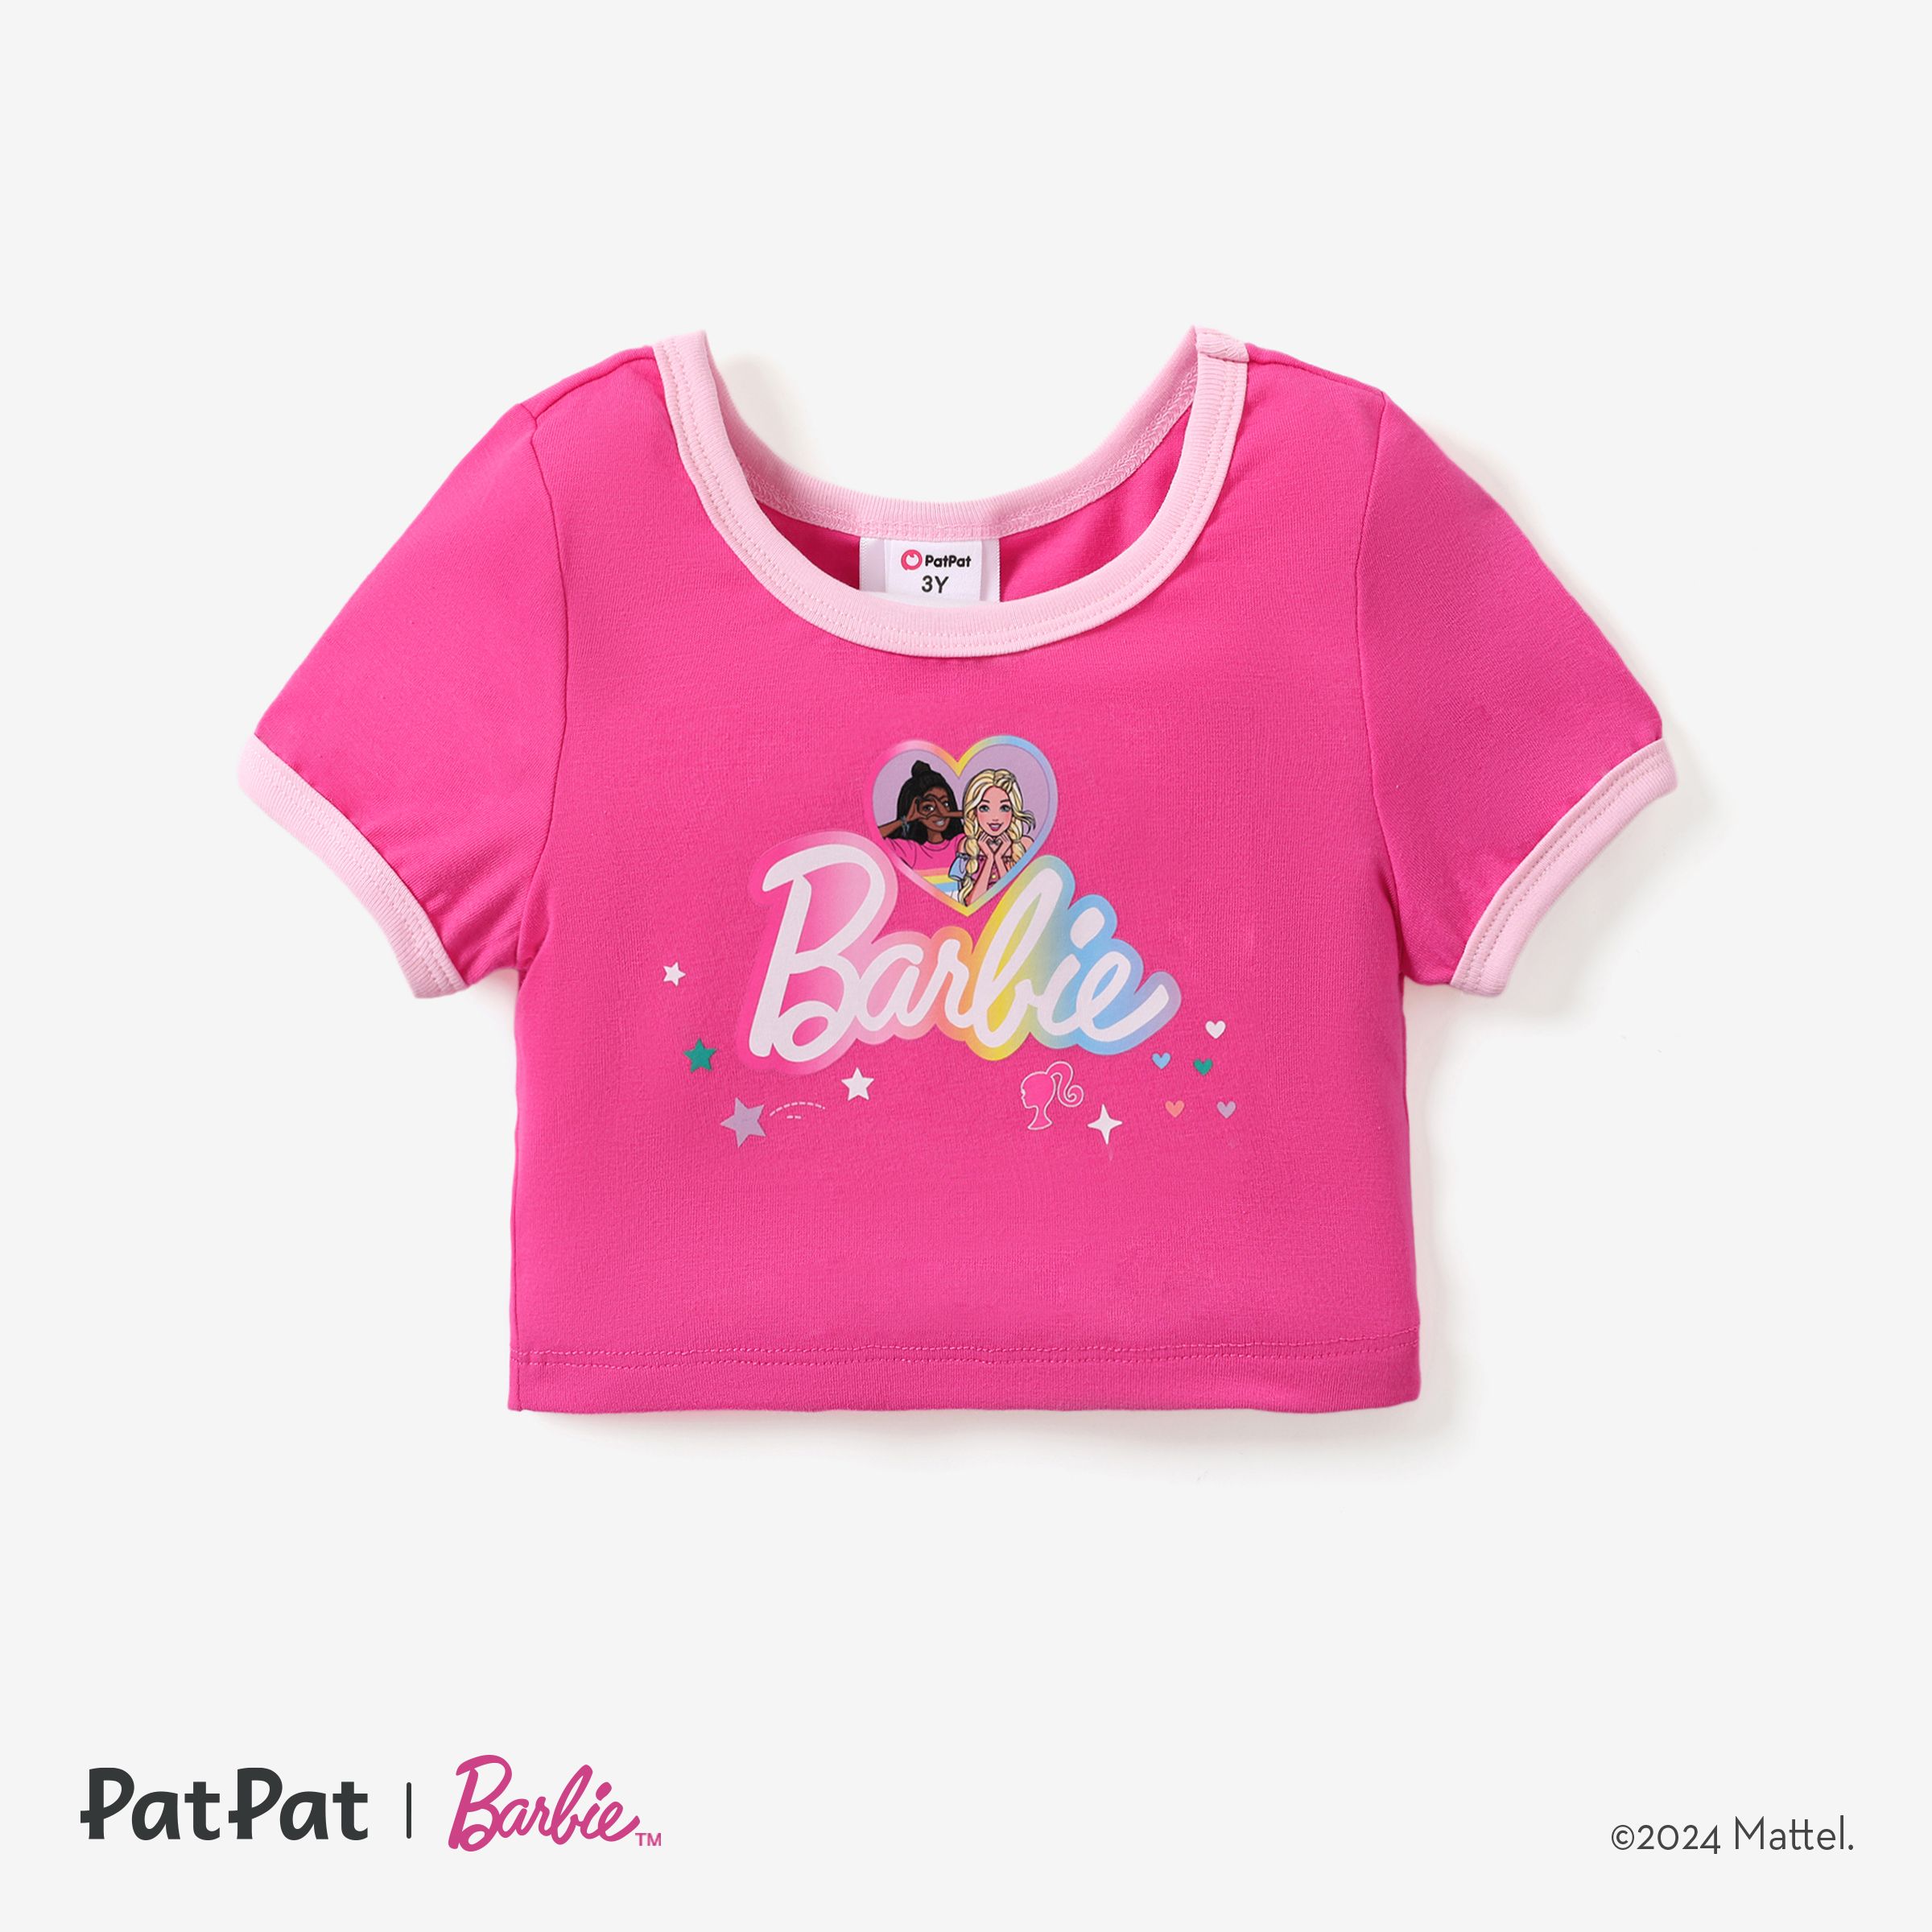 Barbie 1pc Toddler/Kids Girls Rainbow Letter Print T-shirt